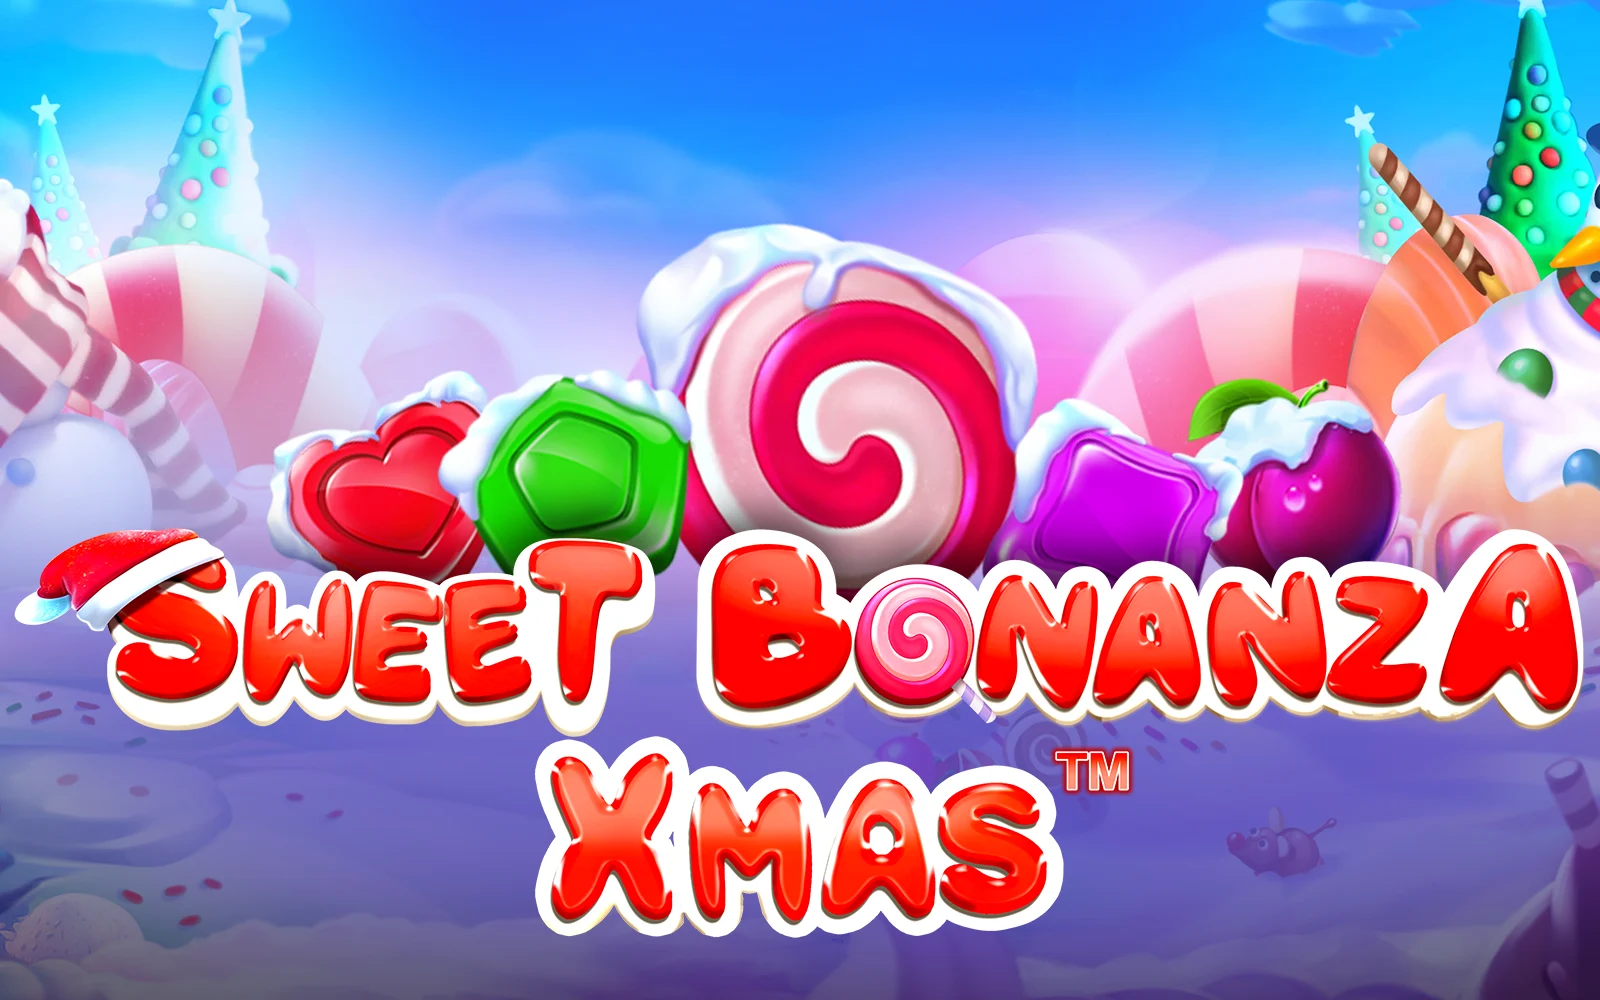 Jogue Sweet Bonanza Xmas™ no casino online Starcasino.be 